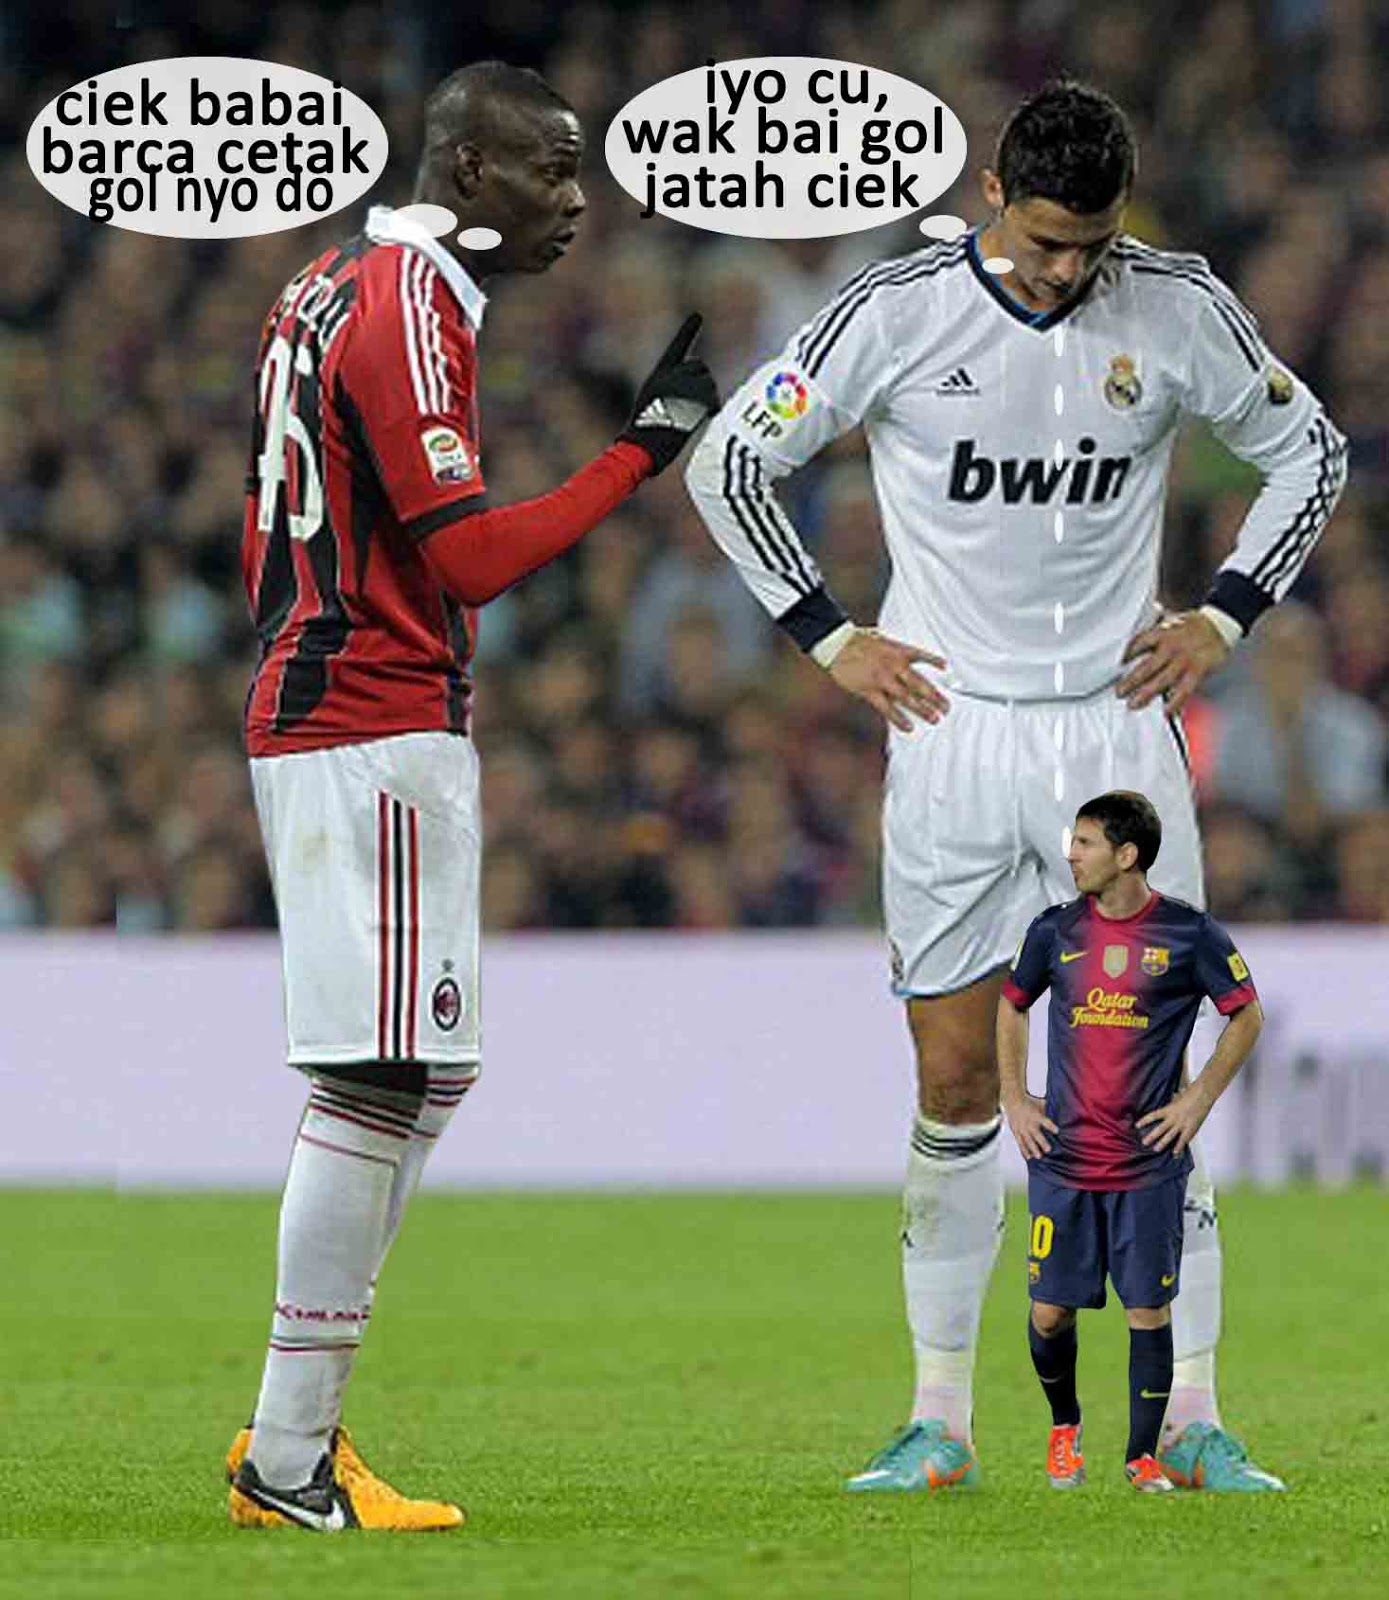 Gambar Bola Lucu Pertanyaan Lucu Balotelli Terhadap Cristiano